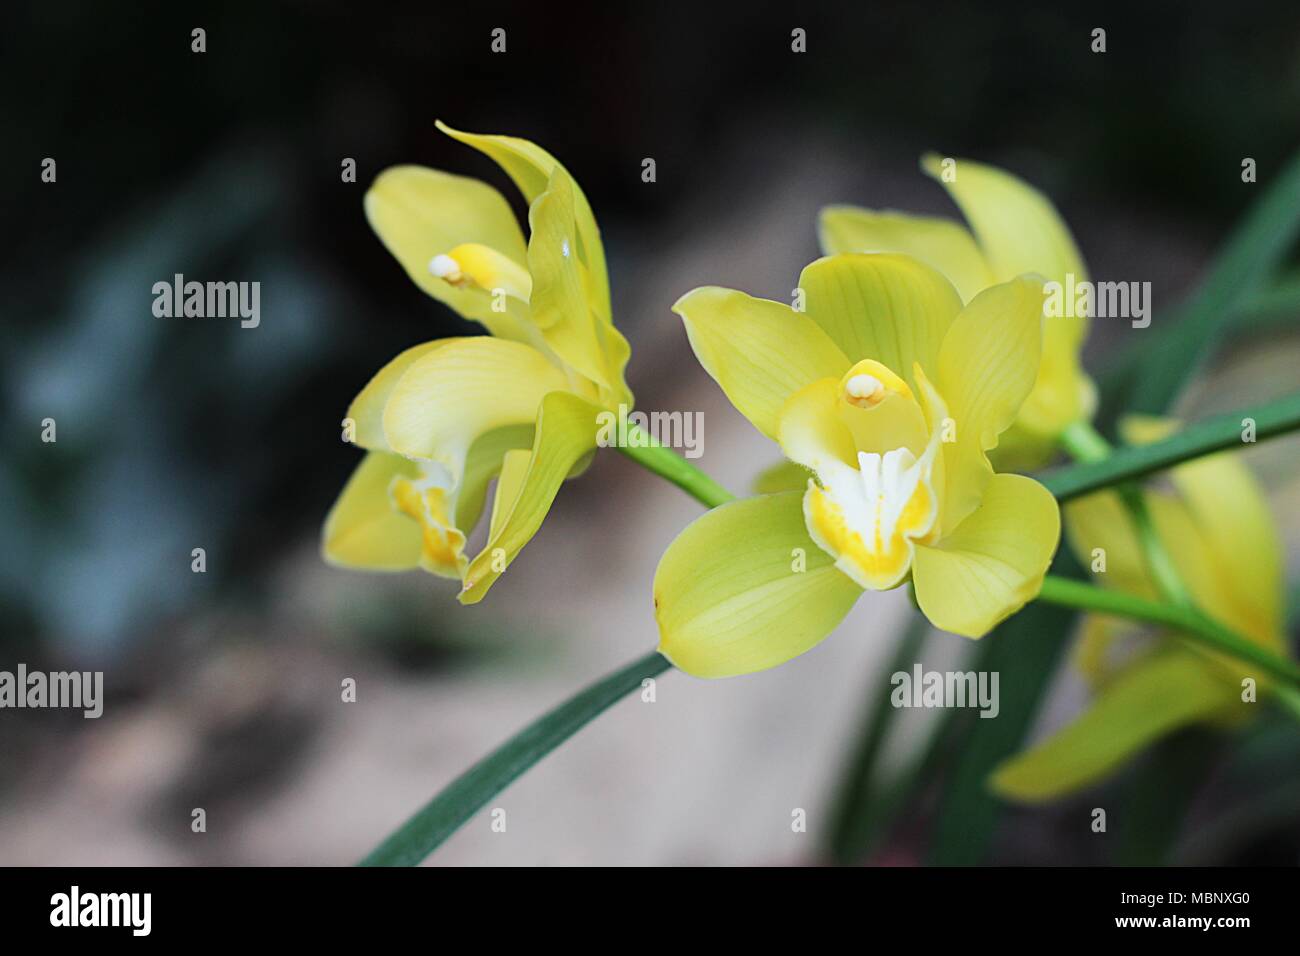 Yellow flowers of Cymbidium orchid Stock Photo